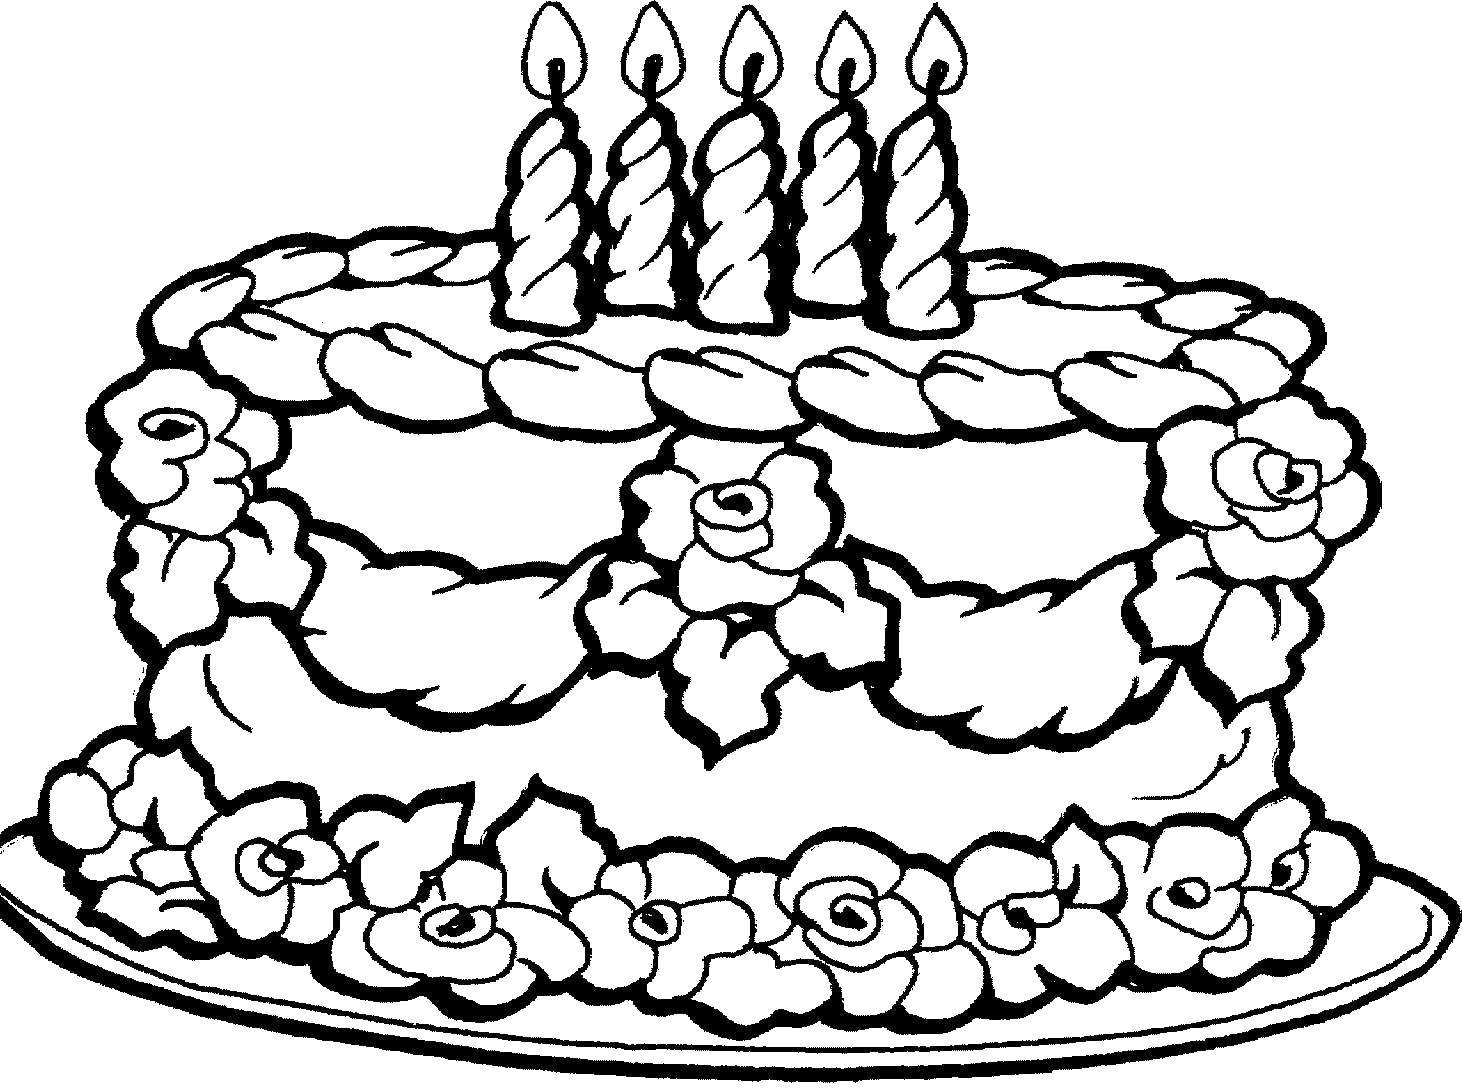 Опис: розмальовки  Прикрашений тортик. Категорія: торти. Теги:  Торт, їжа, свято.